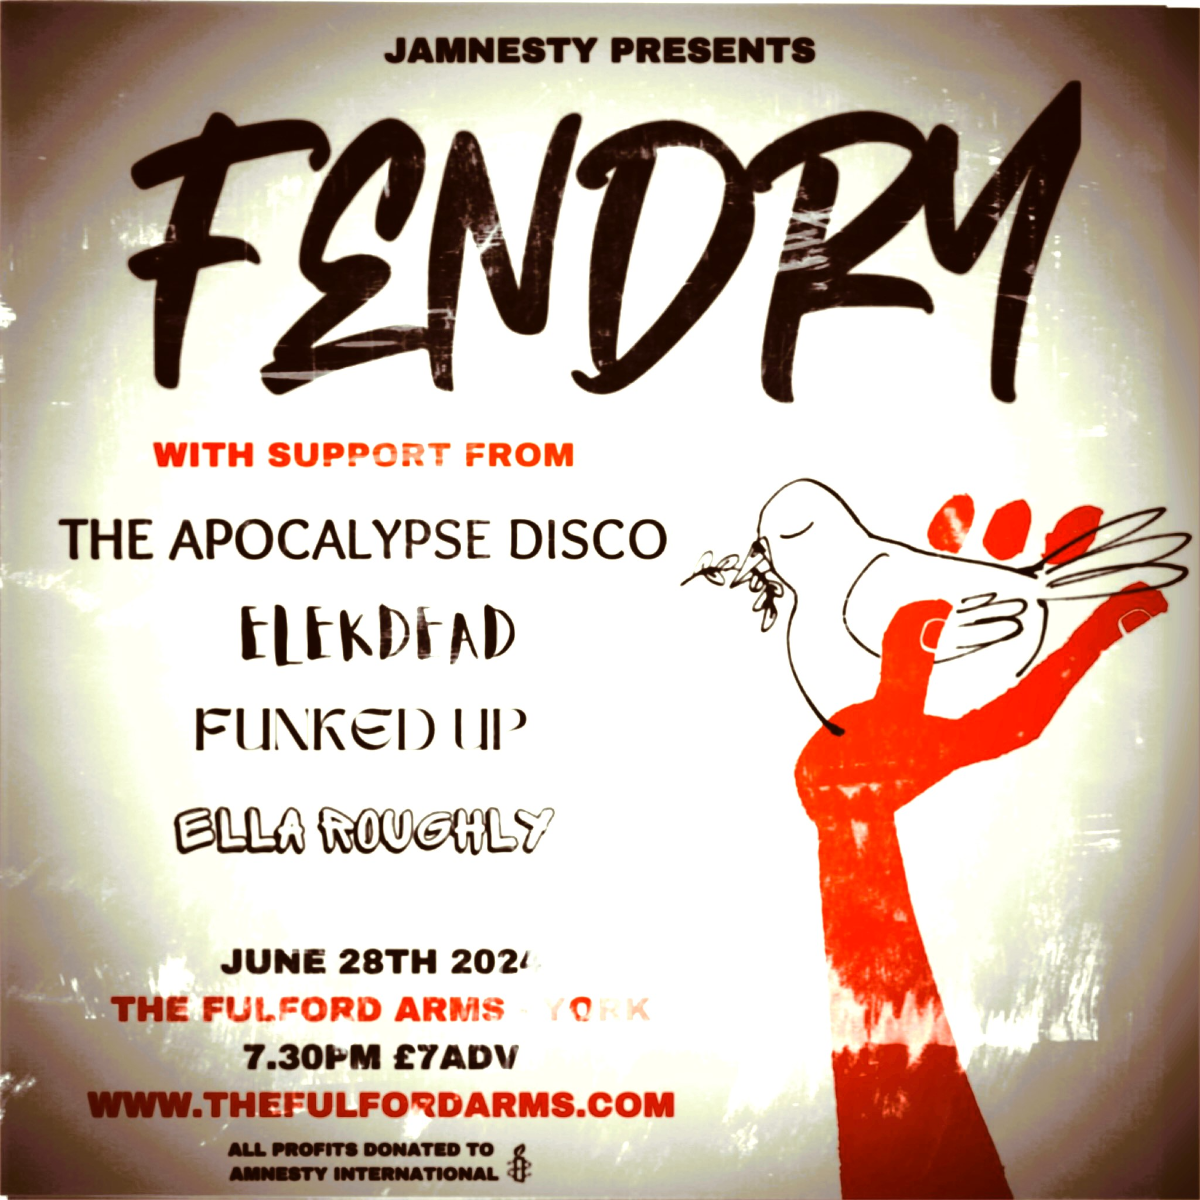 JAMNESTY presents:  FENDRY - THE APOCALYPSE DISCO - ELEKDEAD - FUNKED UP...